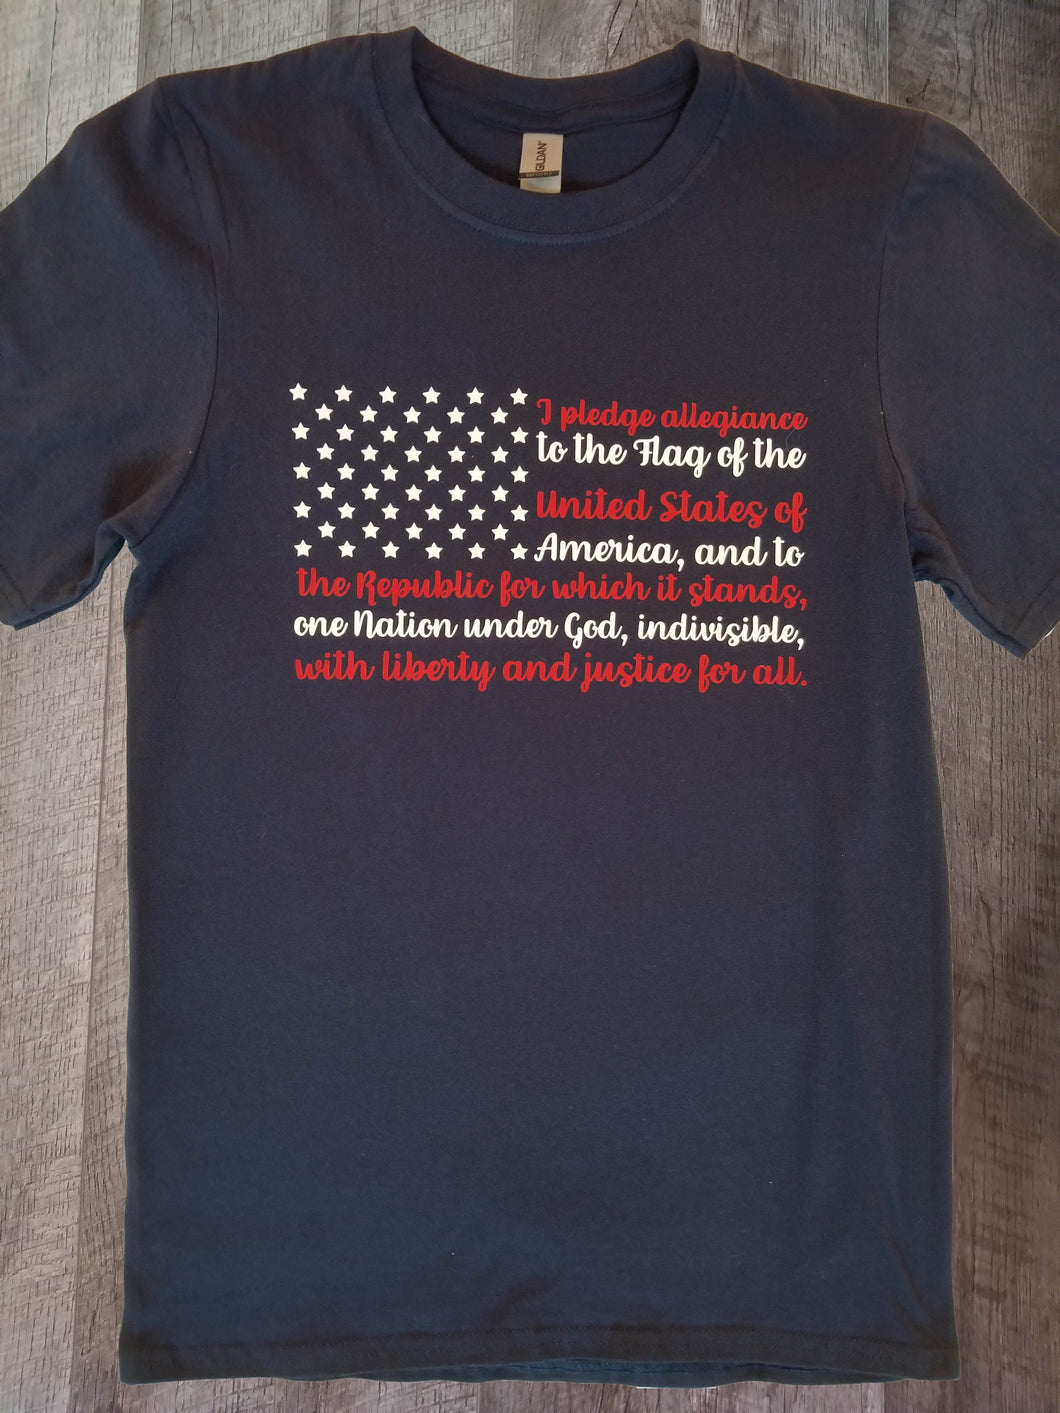 I Pledge Allegiance to the Flag - Navy Blue SS T Shirt